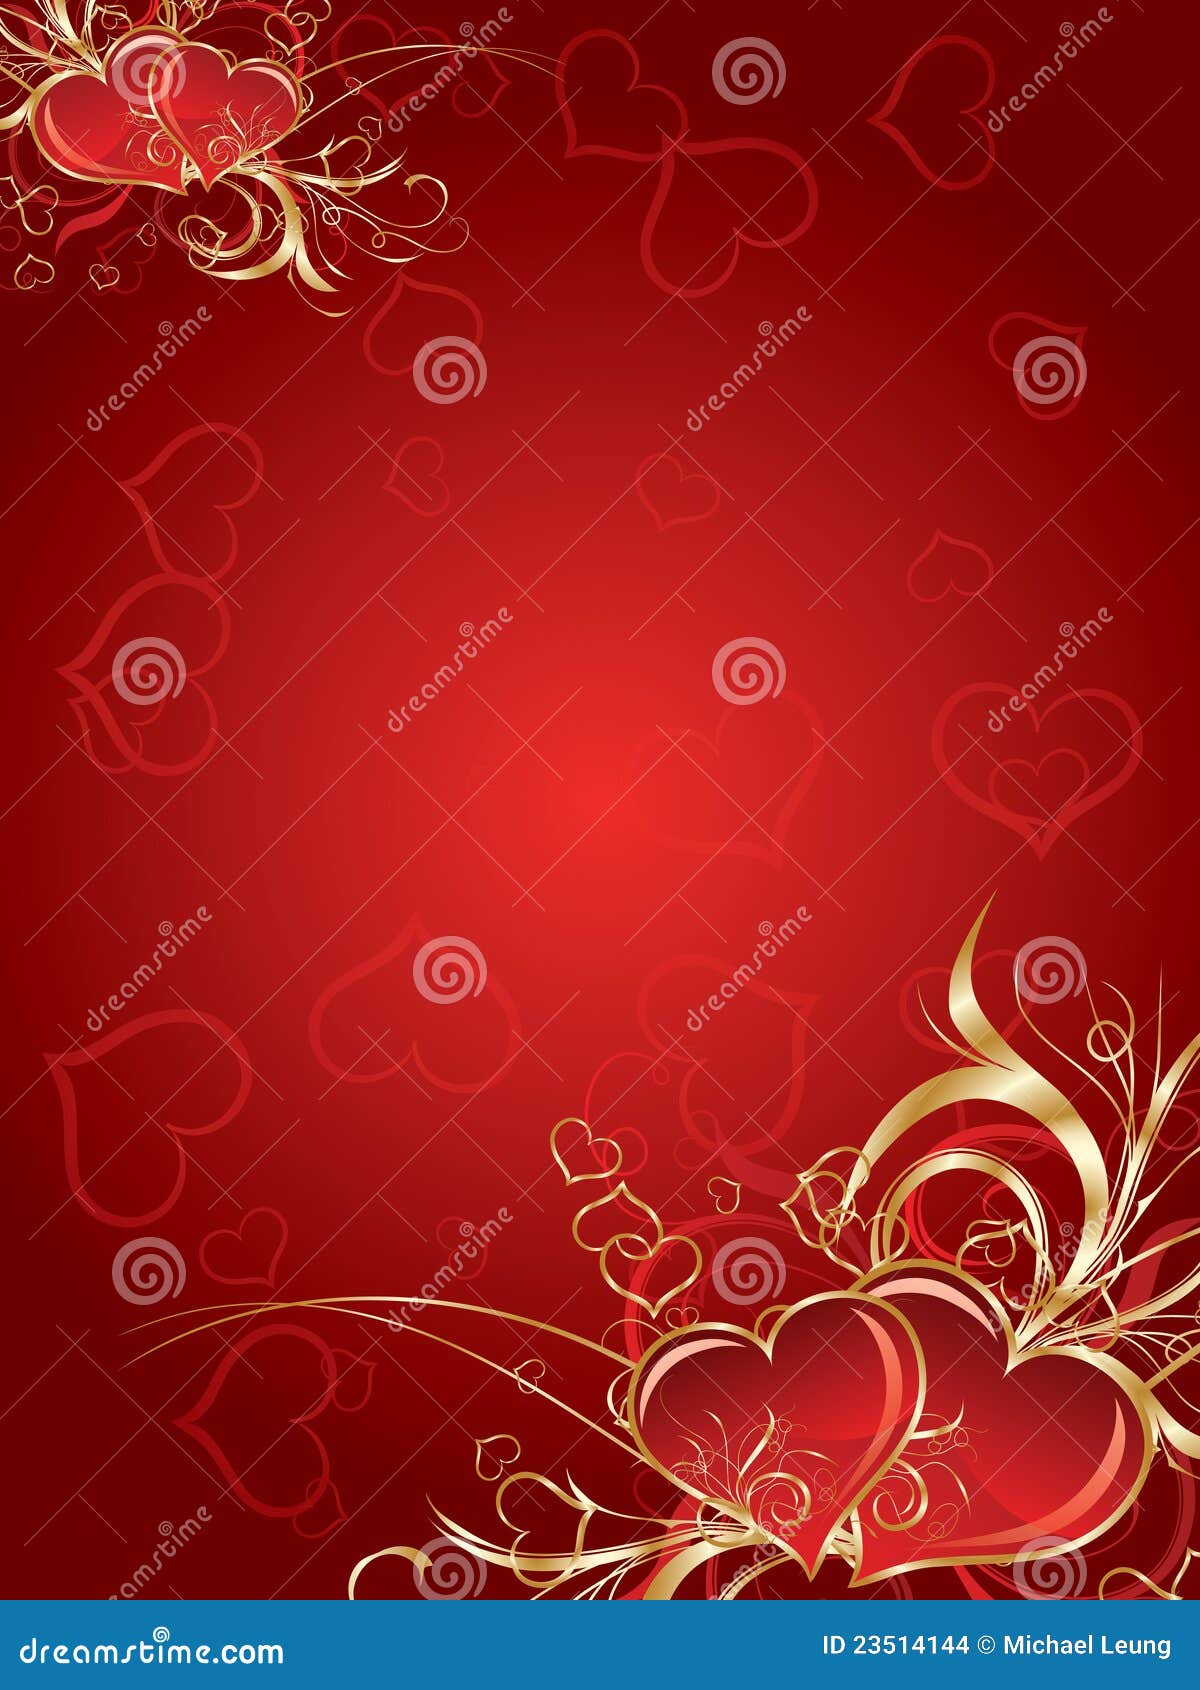 Valentine s Day stock vector. Illustration of love, graphics - 23514144